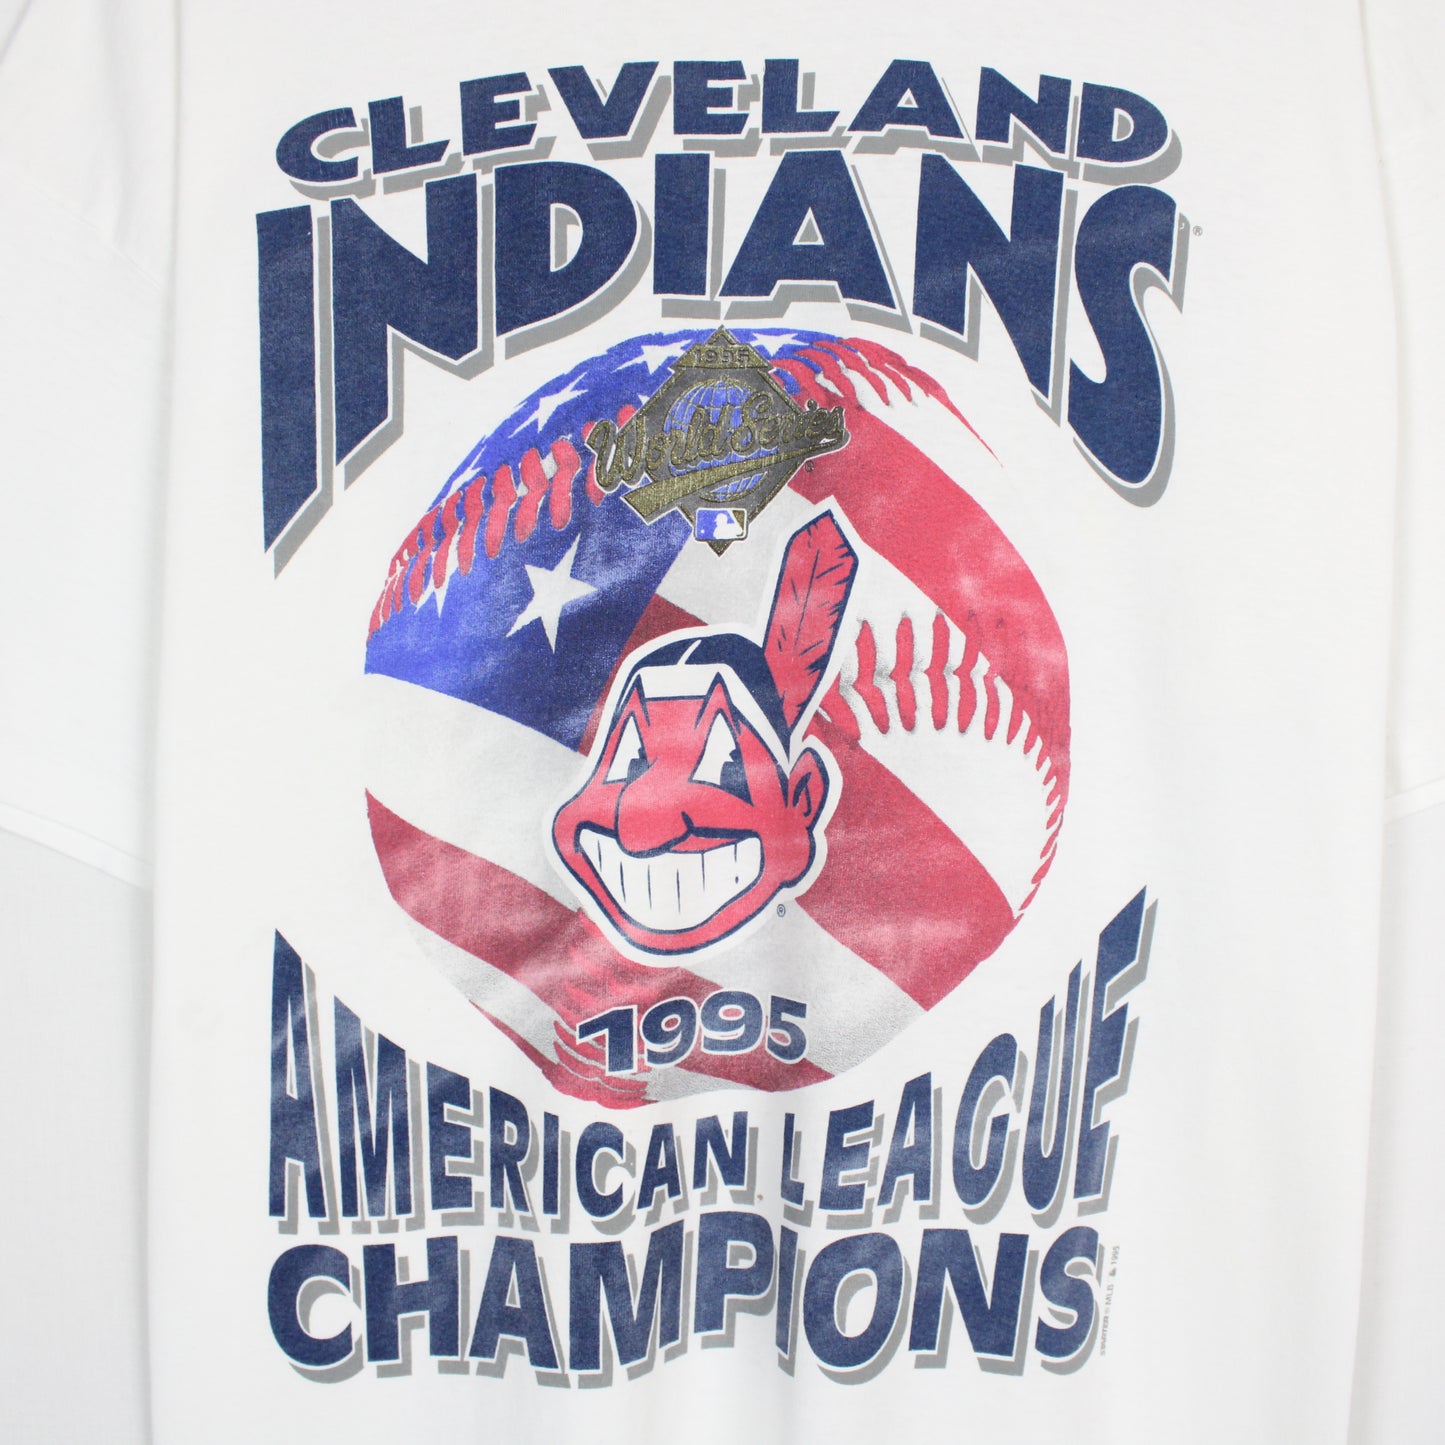 Vintage 1995 Cleveland Indians MLB Tee - XL